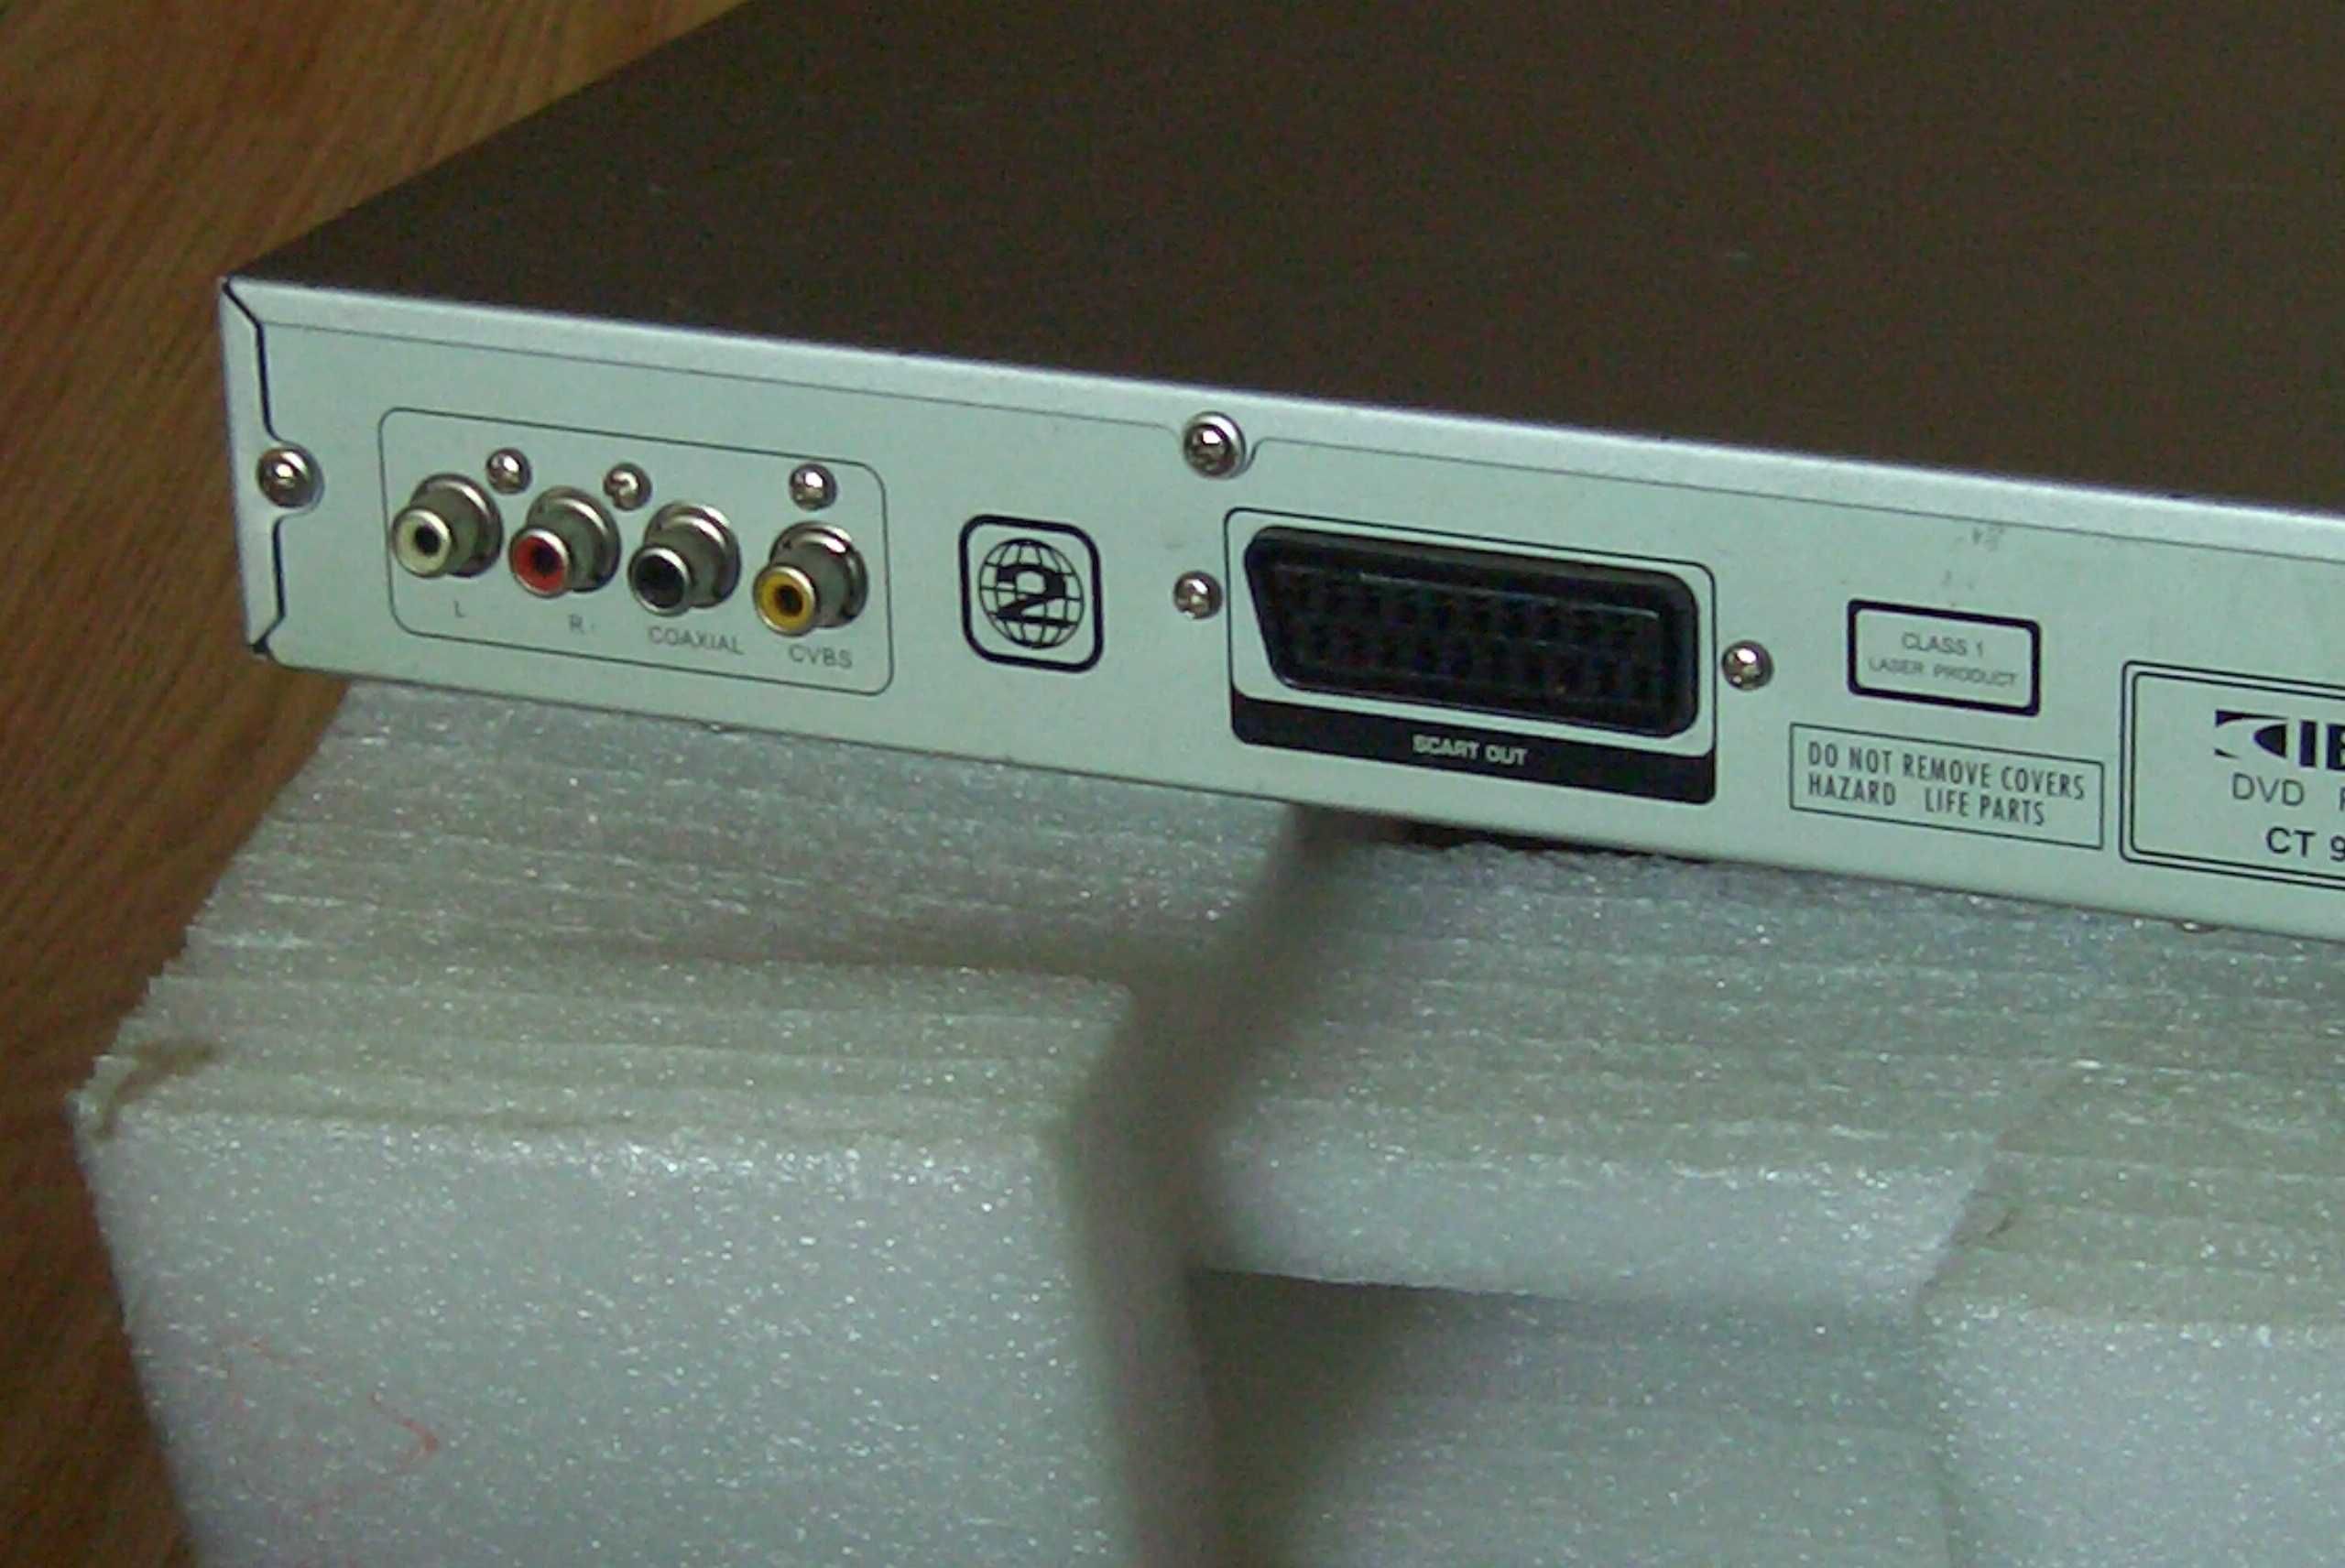 DVD Ibox player odtwarzacz